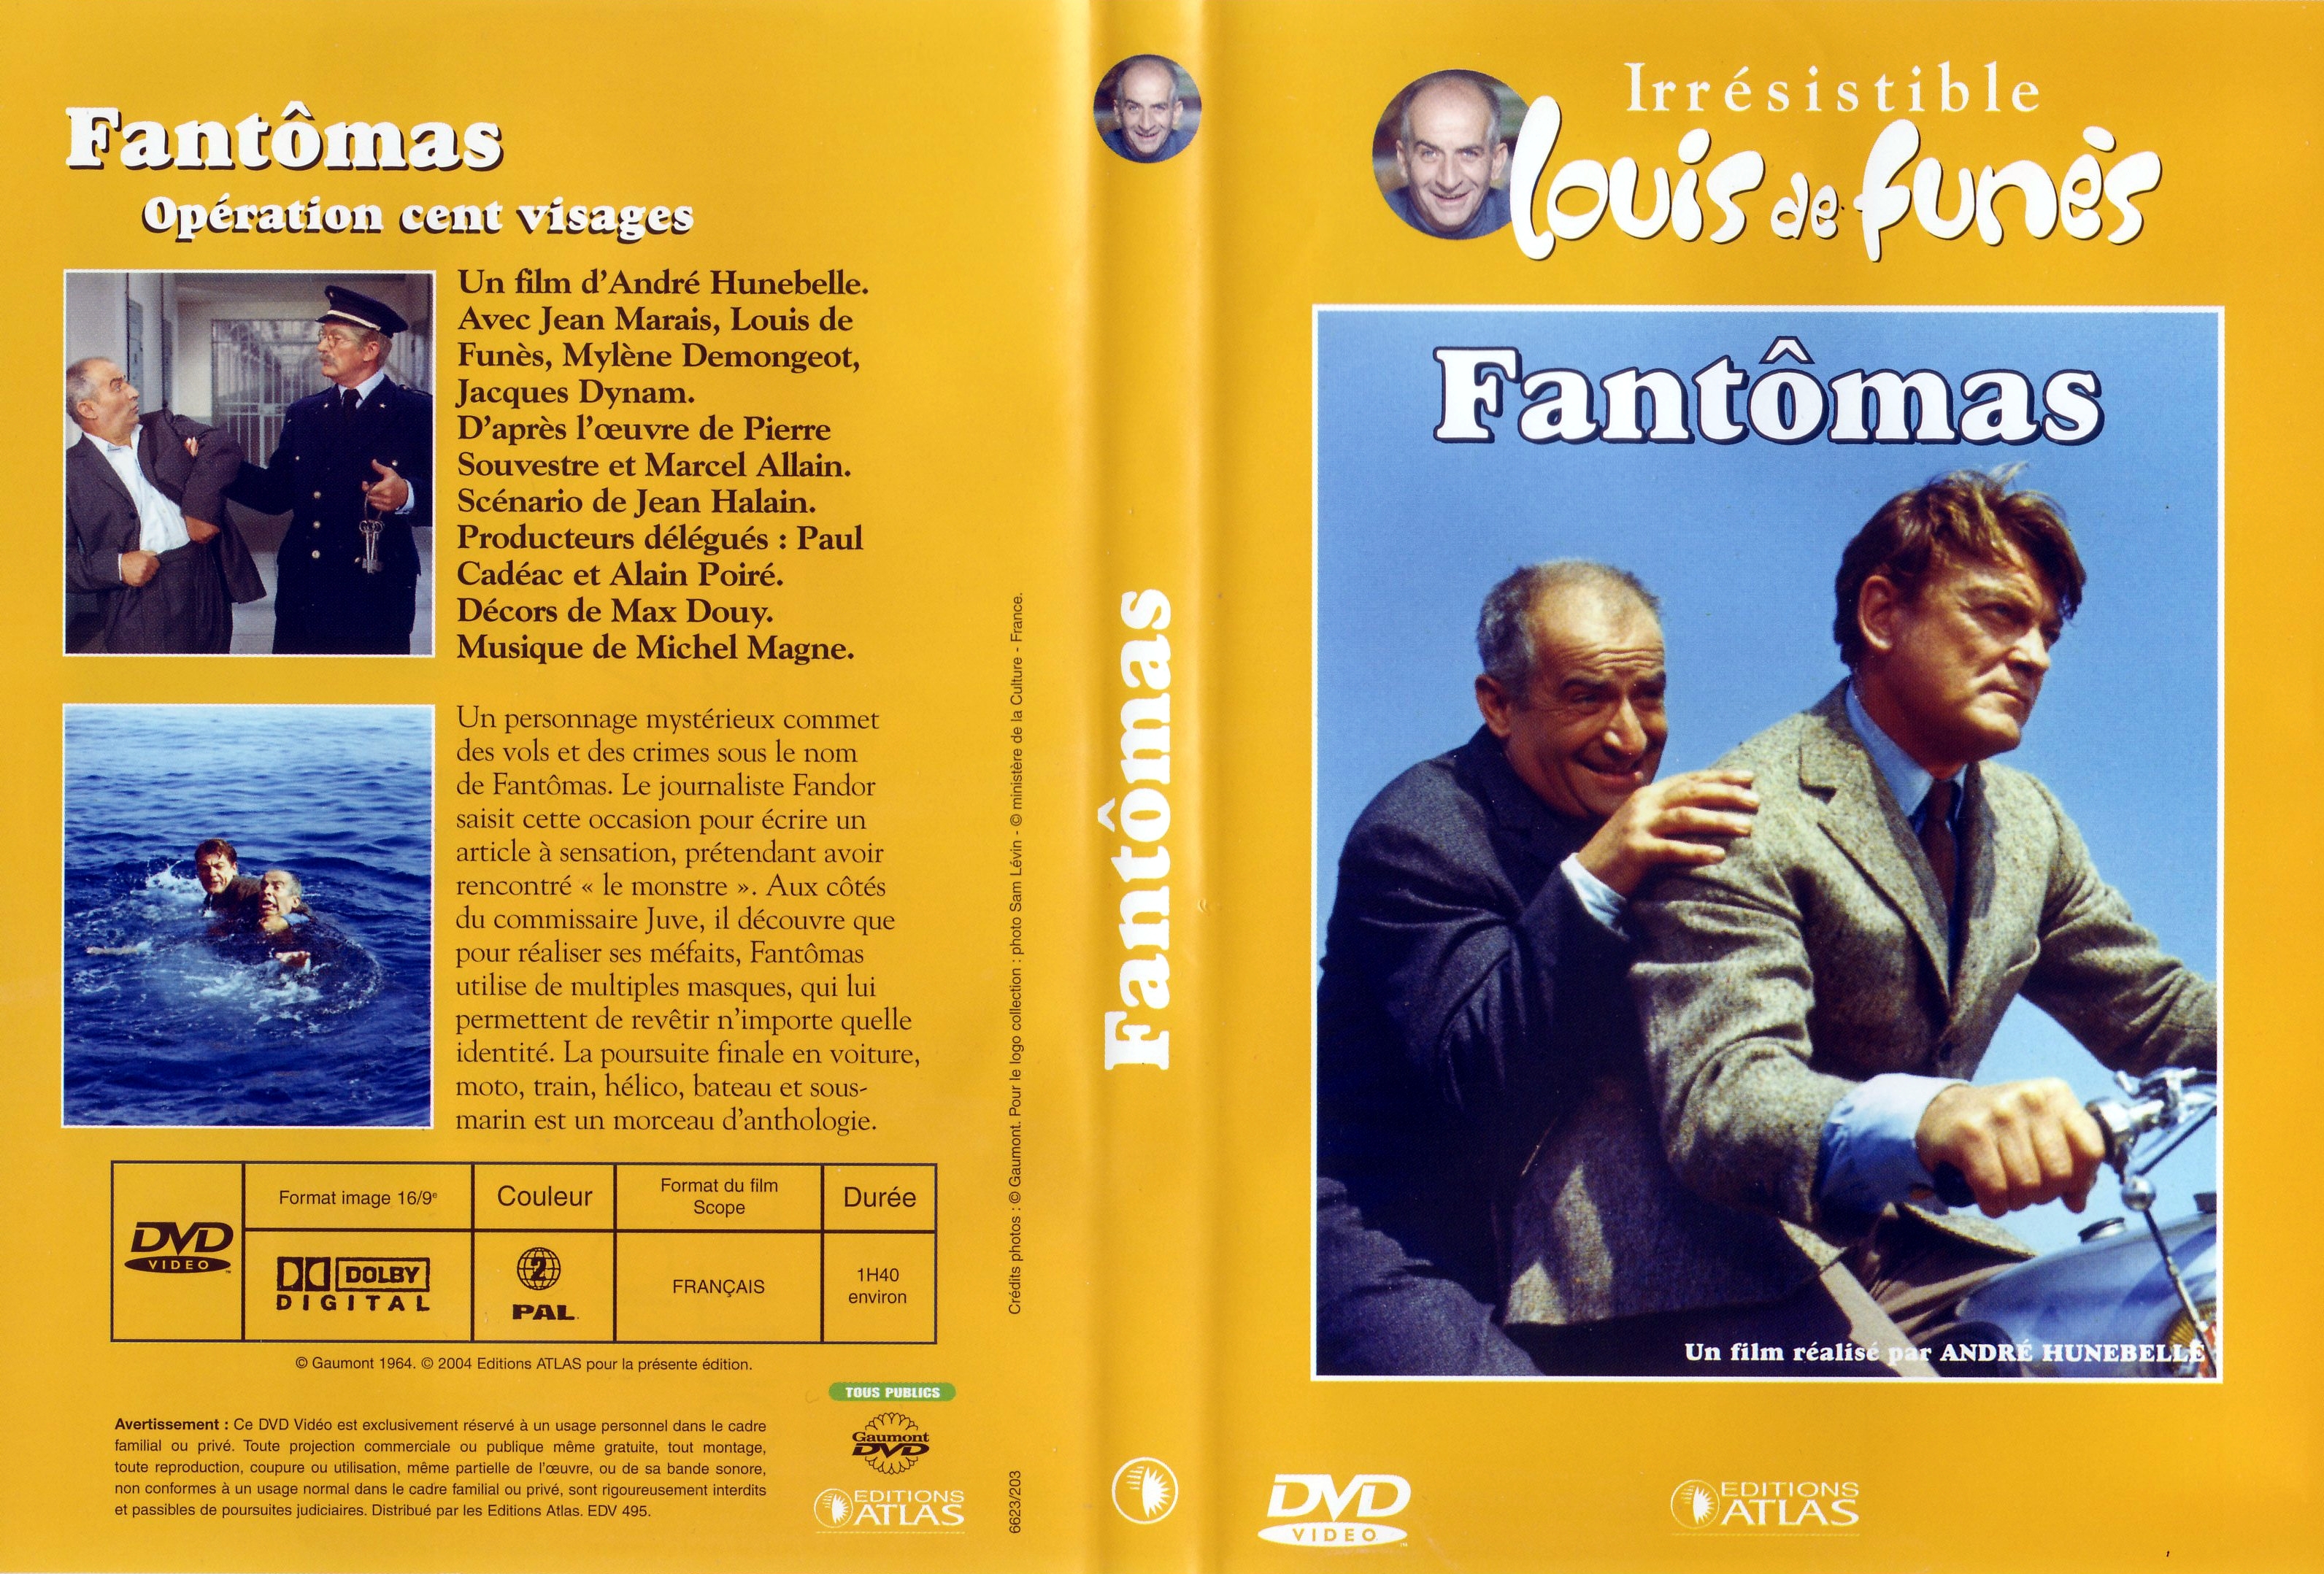 Jaquette DVD Fantomas v2